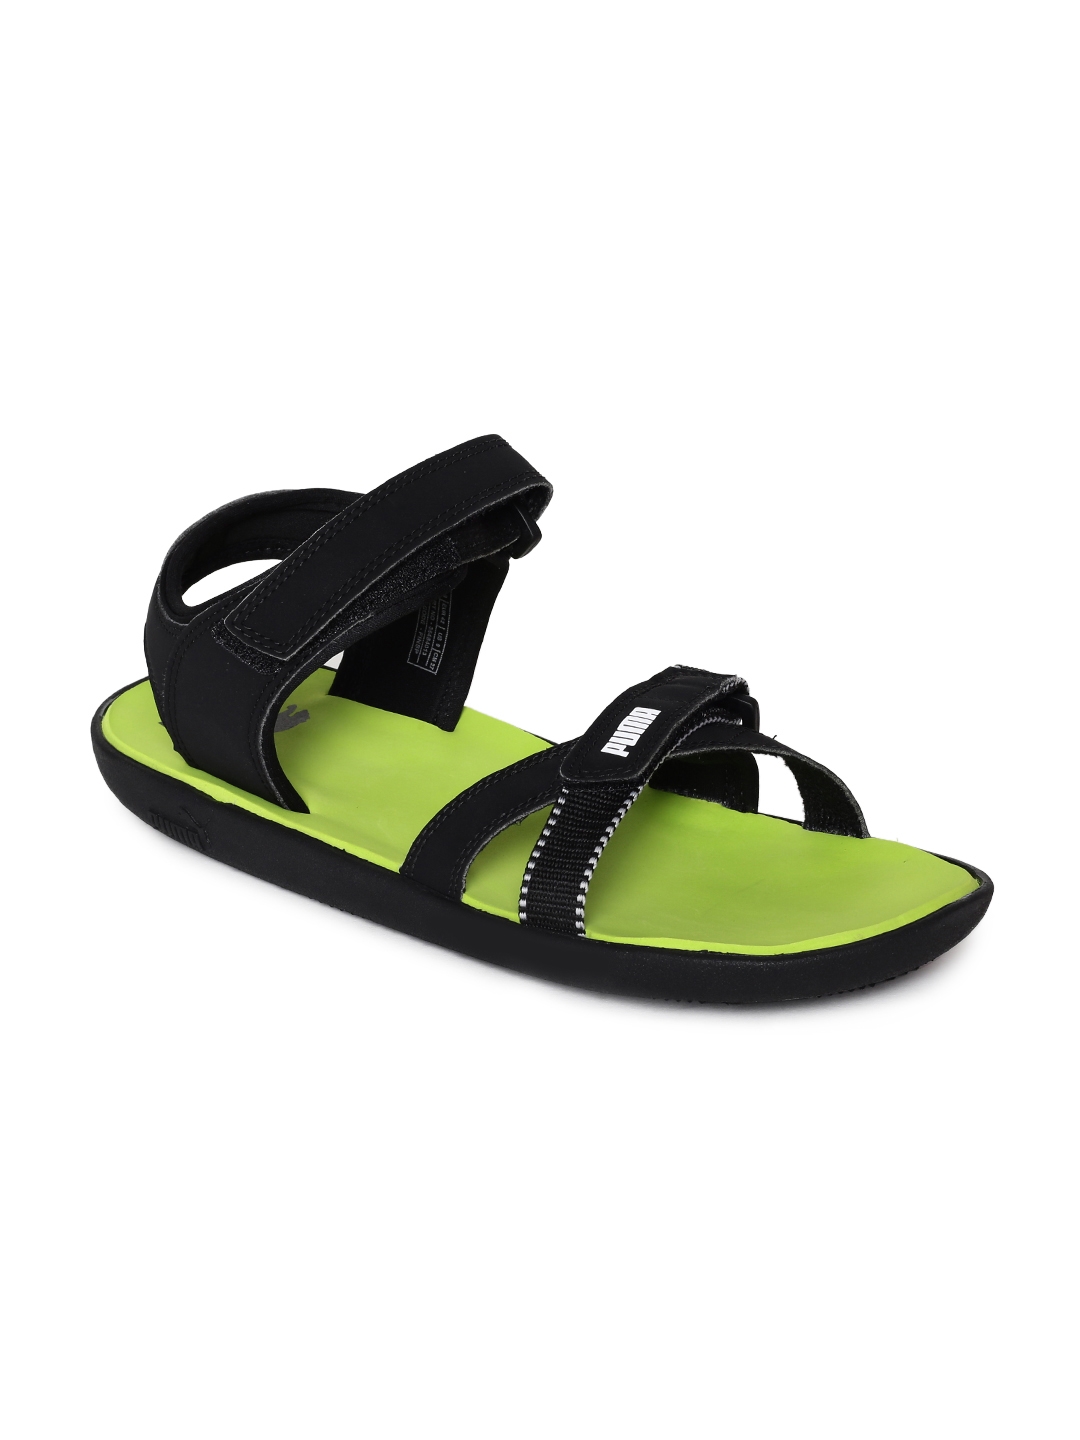 Puma Slides Popcat Pool Beach Sandals Men Sliders Shoes Size 3 4 5 6 7 |  eBay-anthinhphatland.vn